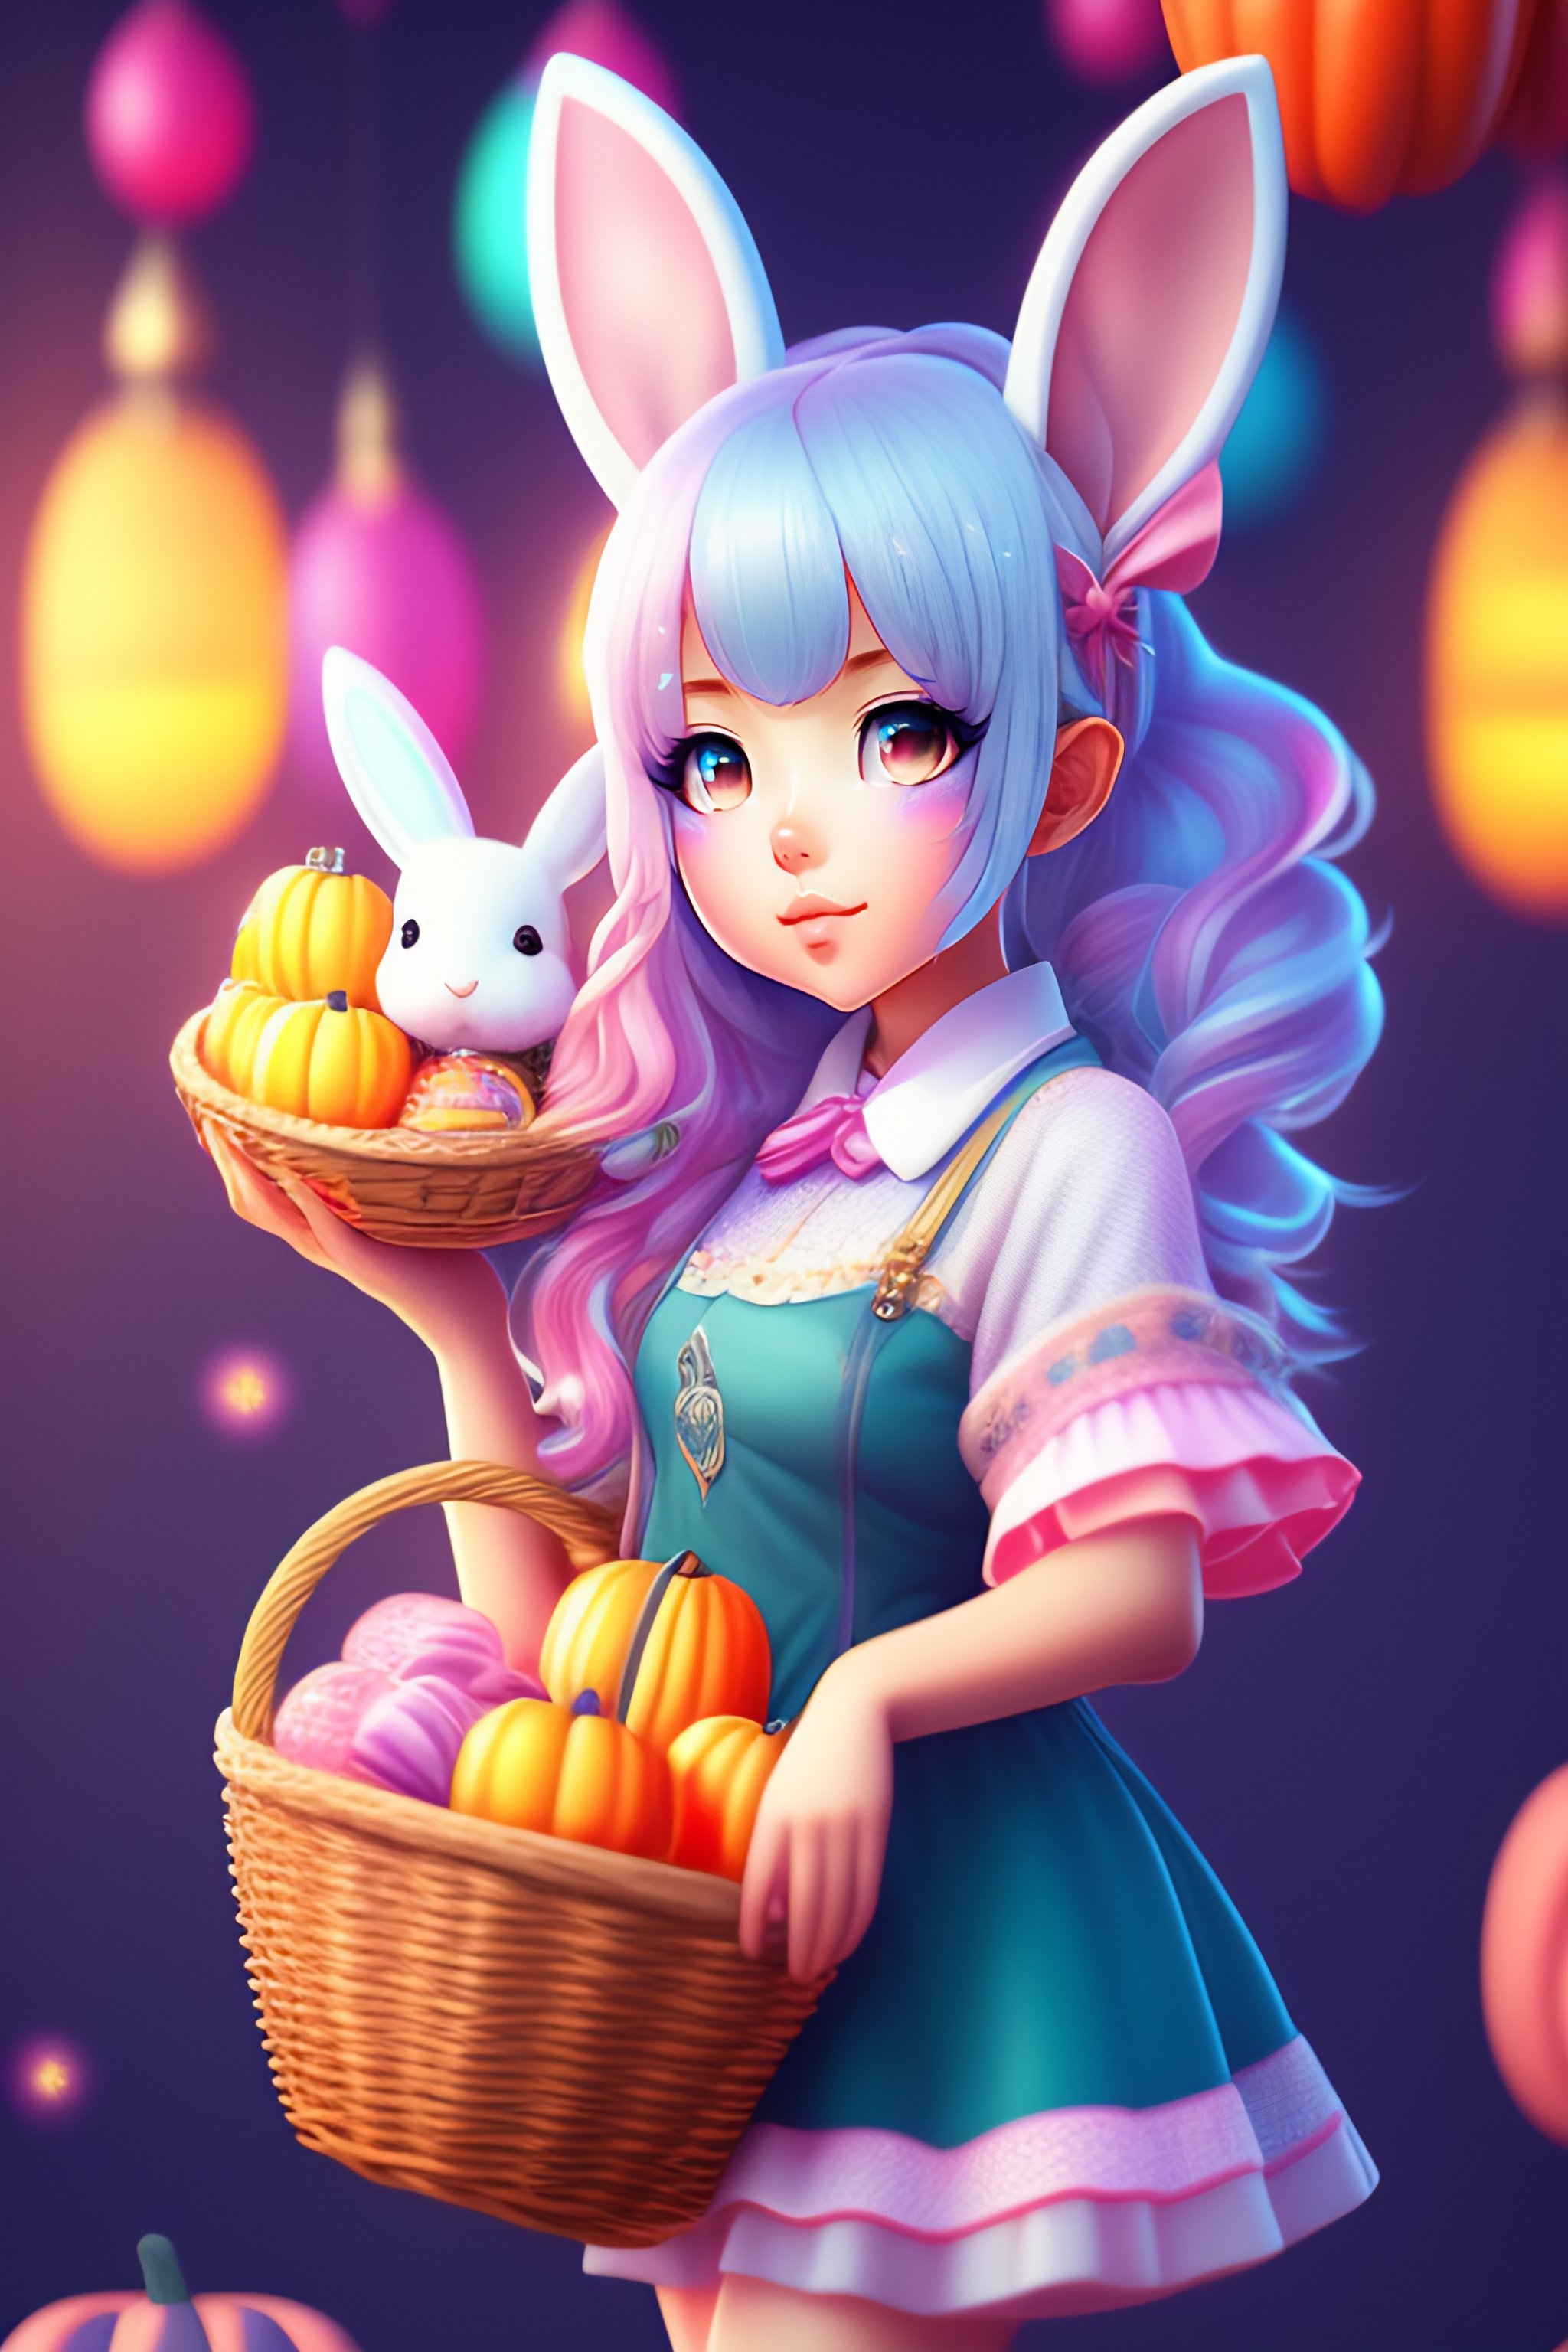 Lexica - Anime,wallpaper like pencil drawing, digital art of cute kawaii  girl with rabbit ears, light blue hair,bob,pink eyes,holding a basket full  o